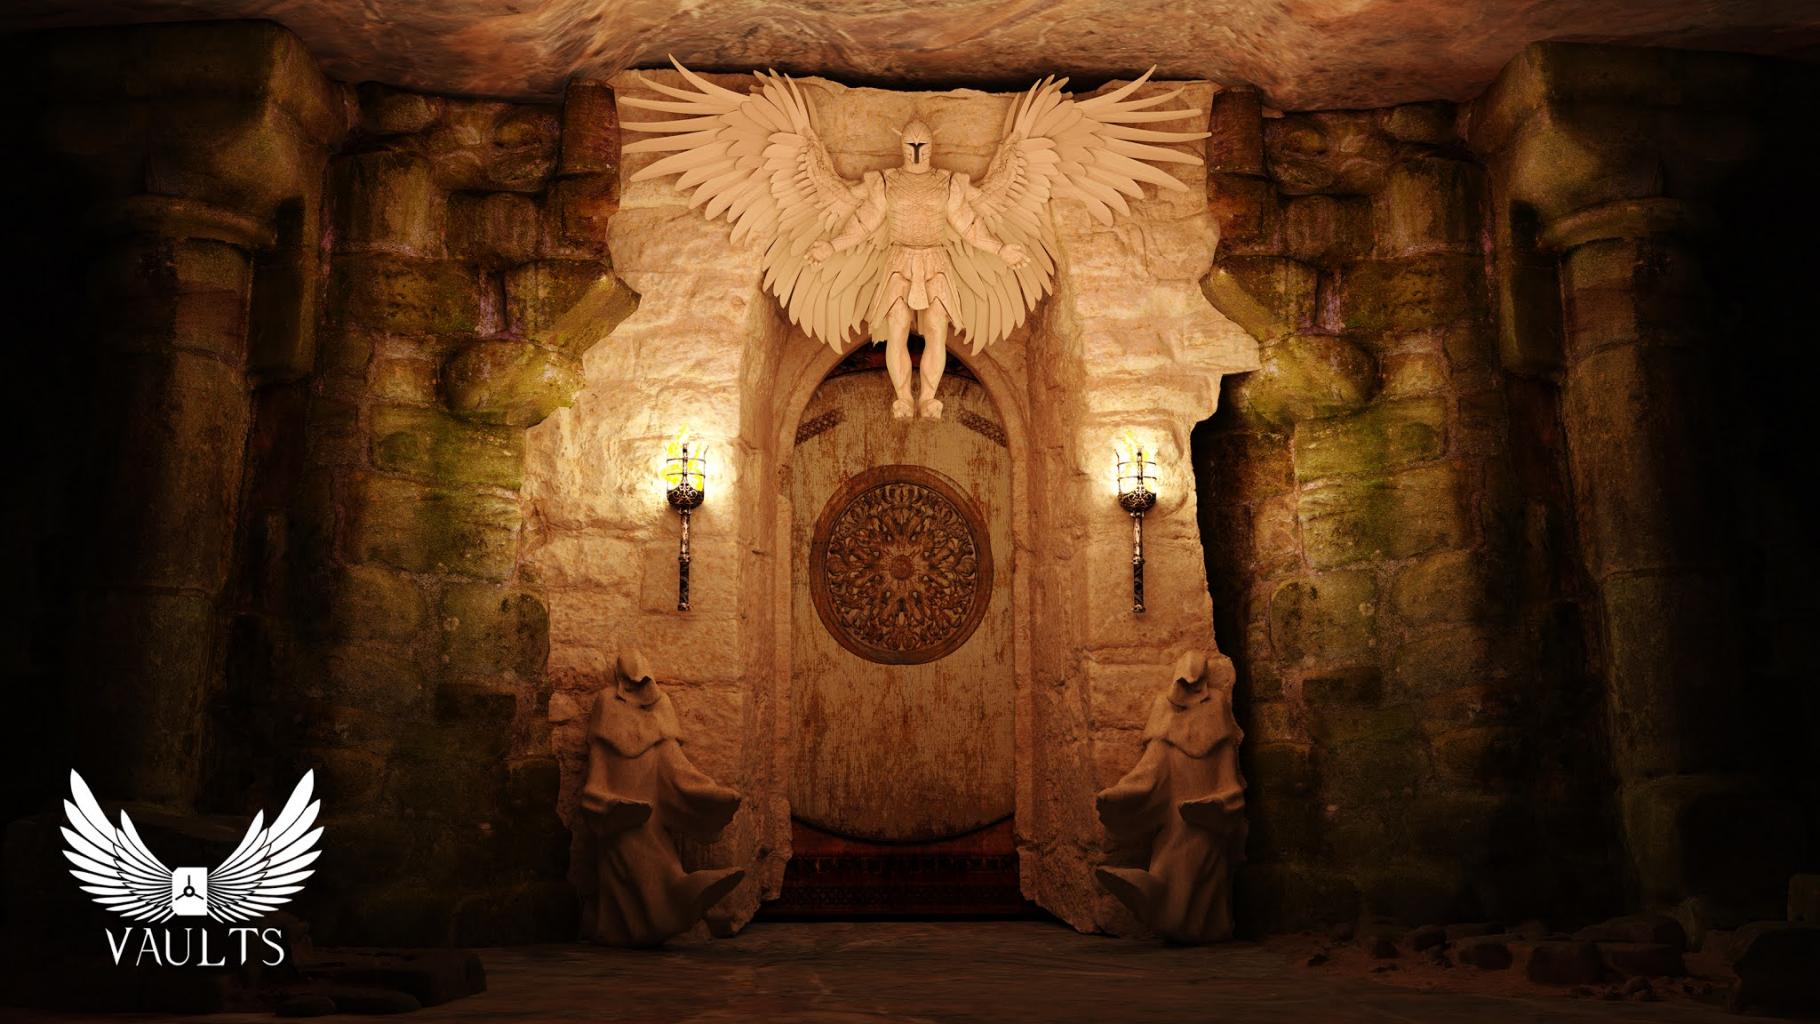 Enter, The Vaults